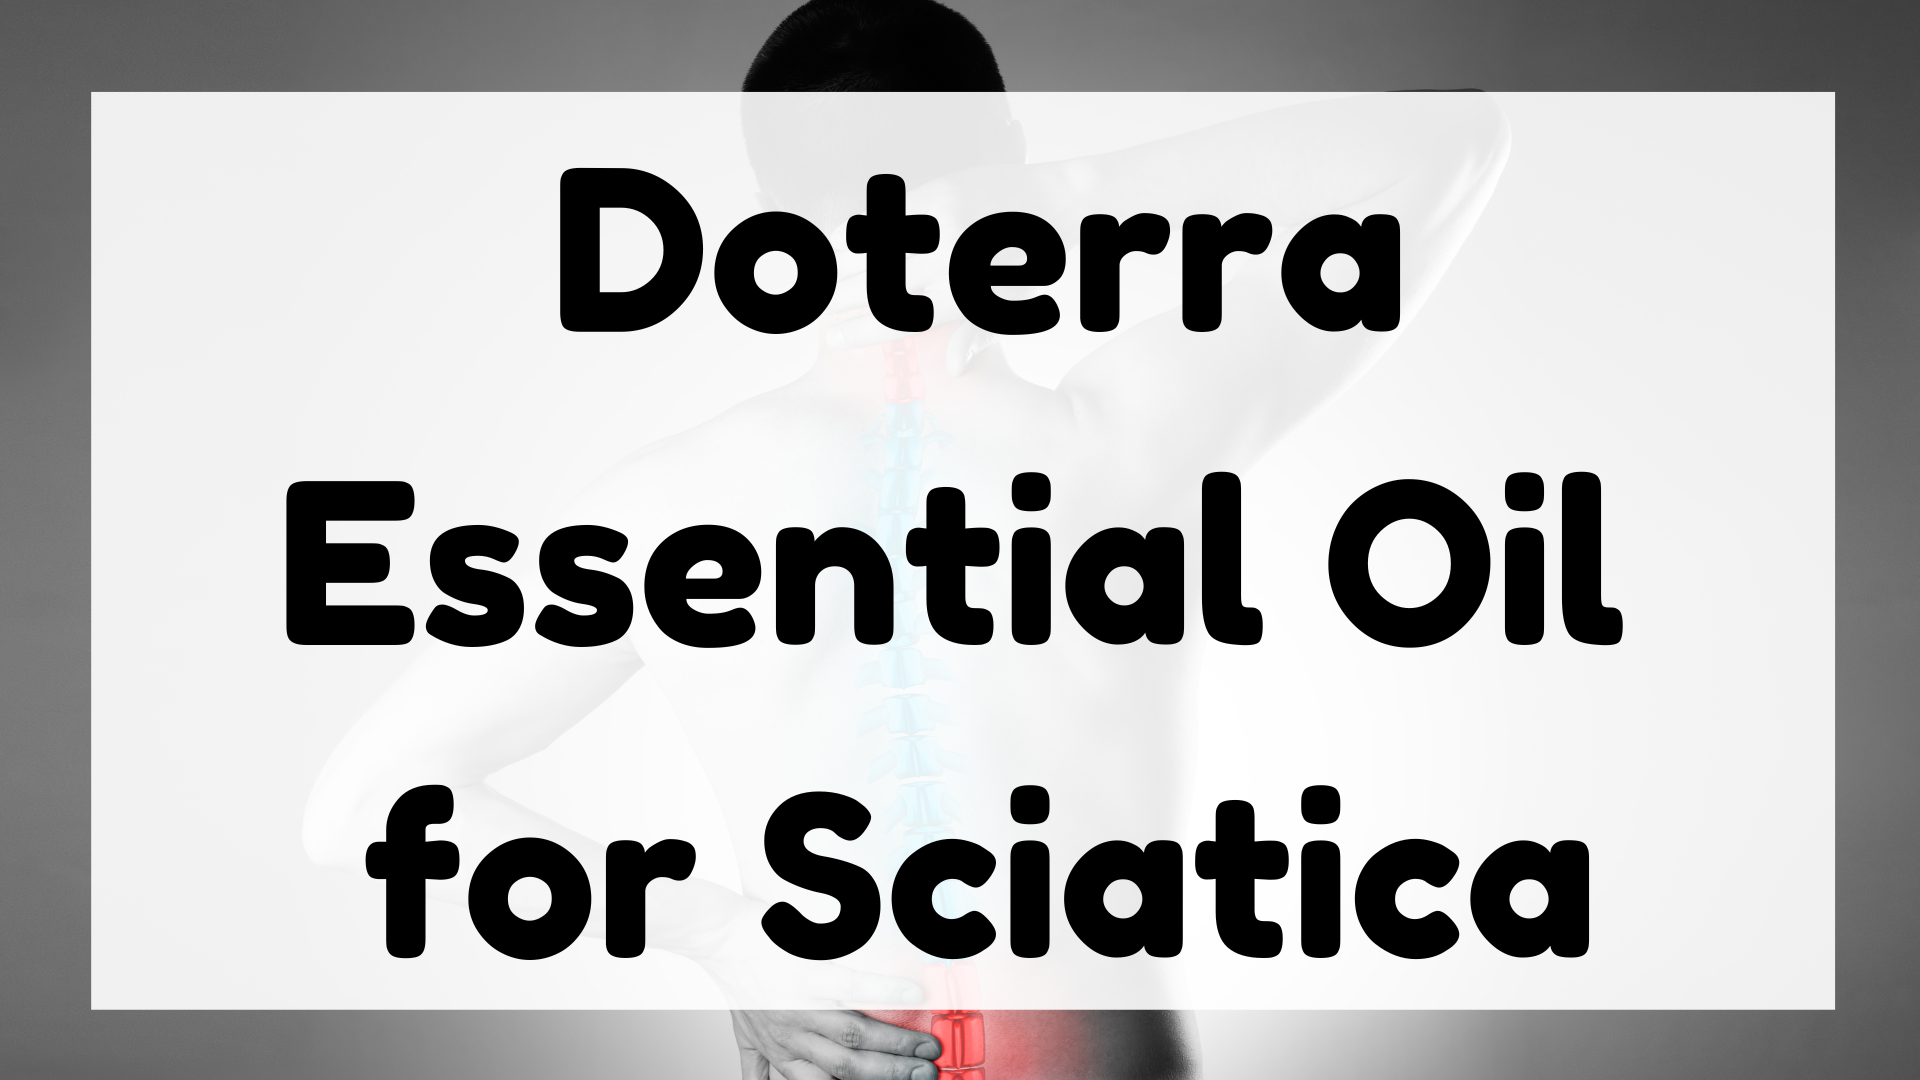 Doterra Essential Oil for Sciatica featured image